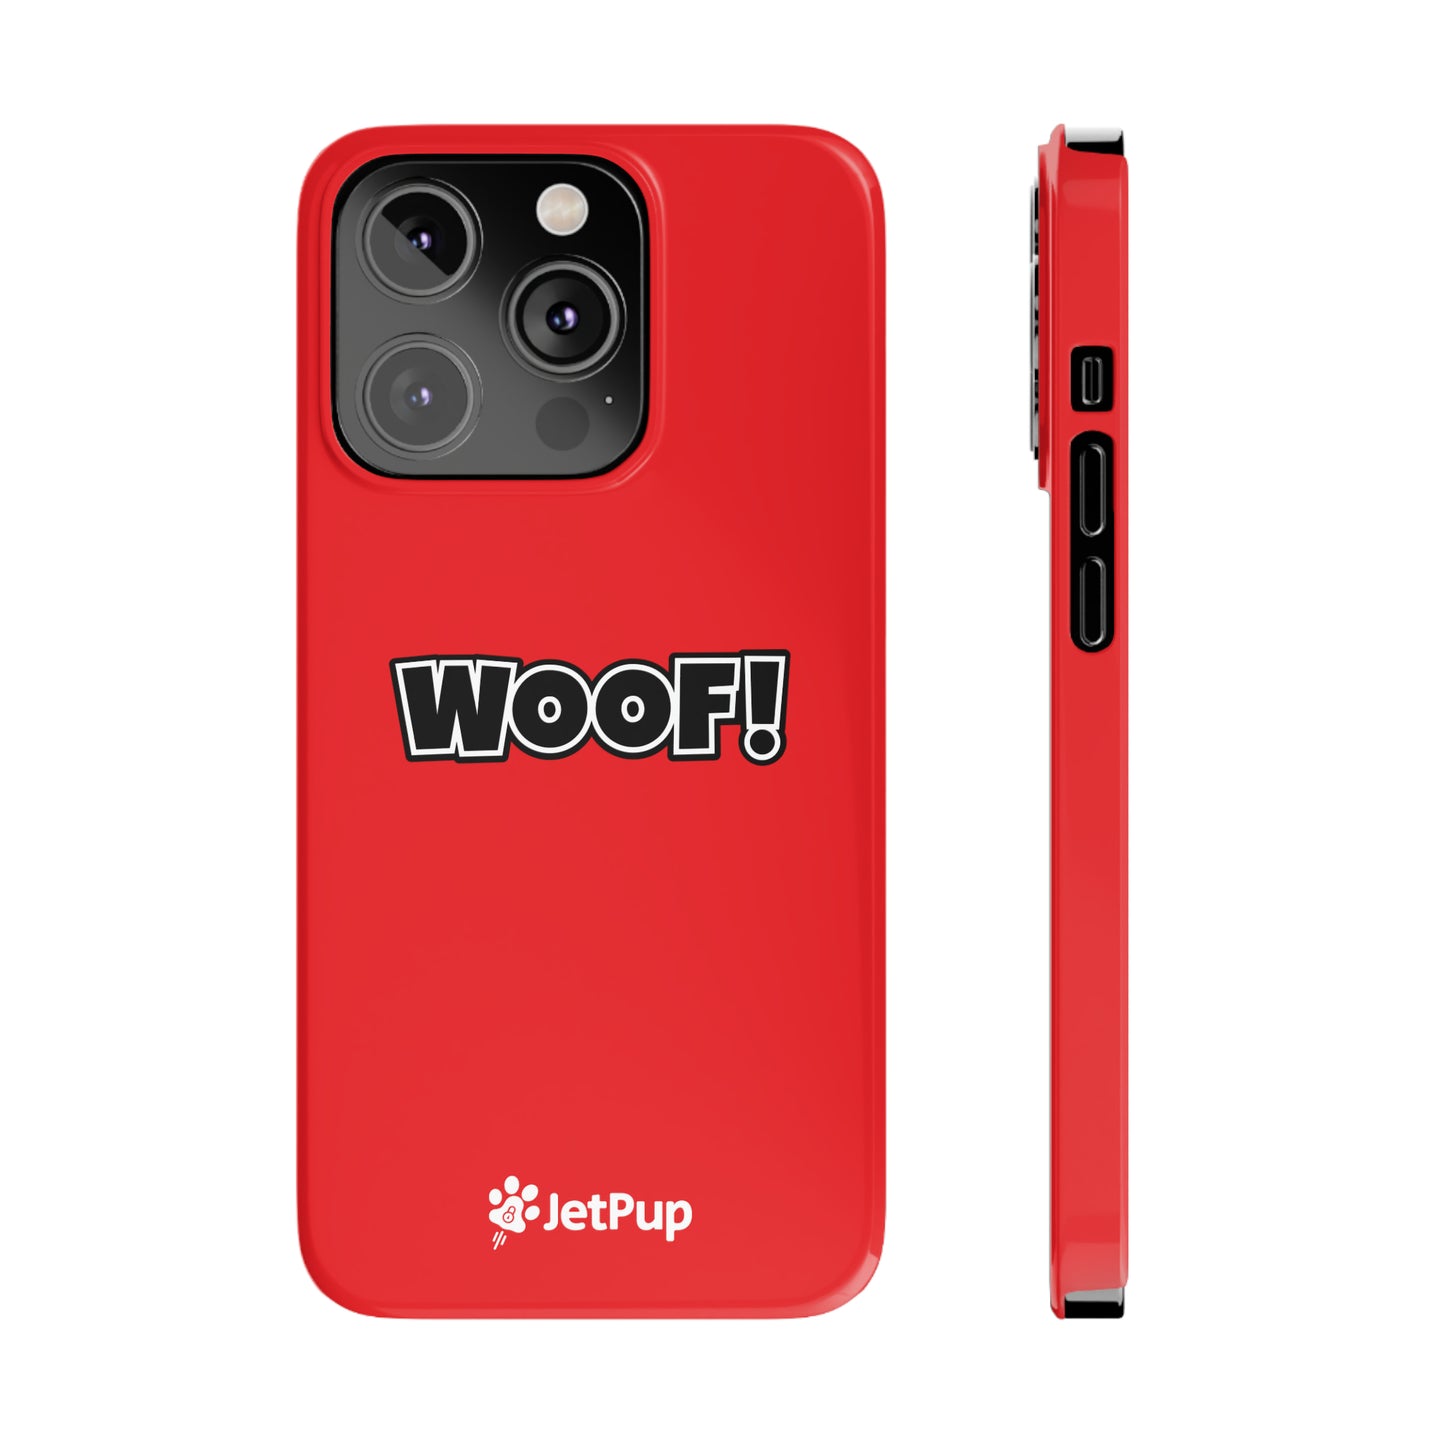 Woof Slim iPhone Cases - Red